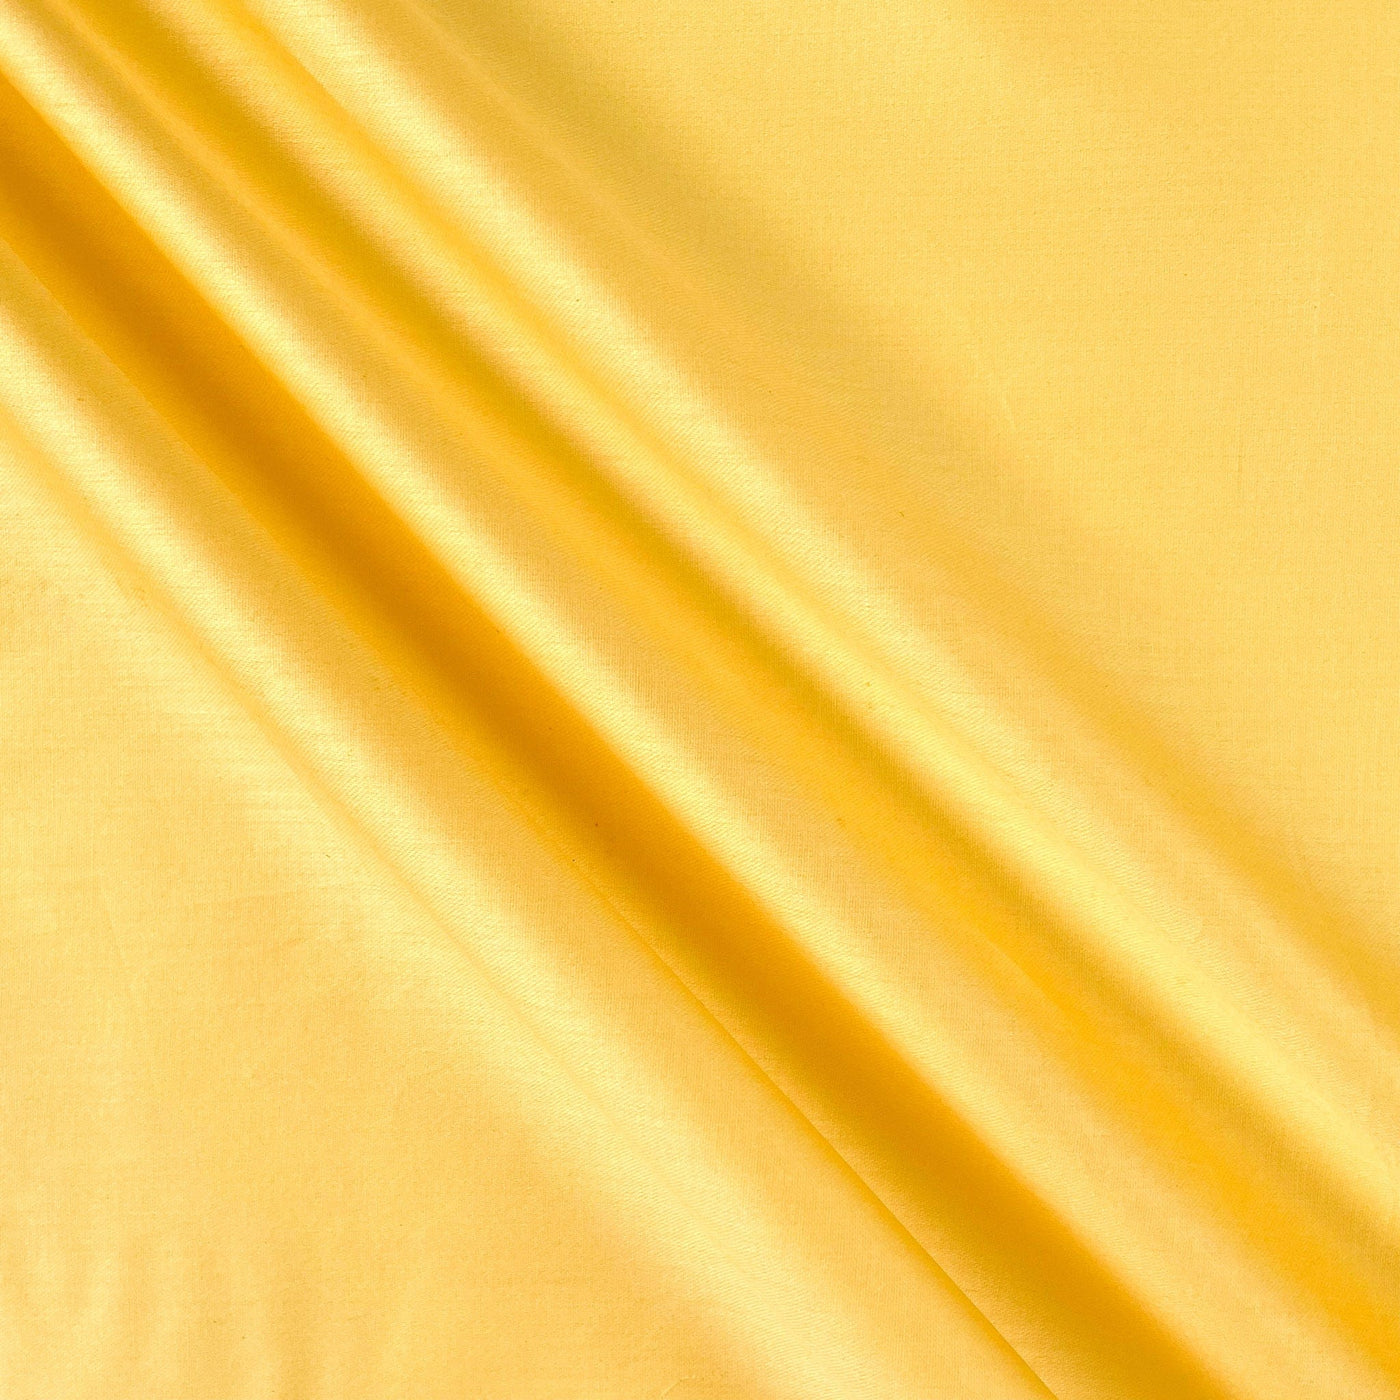 Fabric Pandit Fabric Bright Lemon Yellow Plain Cotton Satin Fabric (Width 42 Inches)